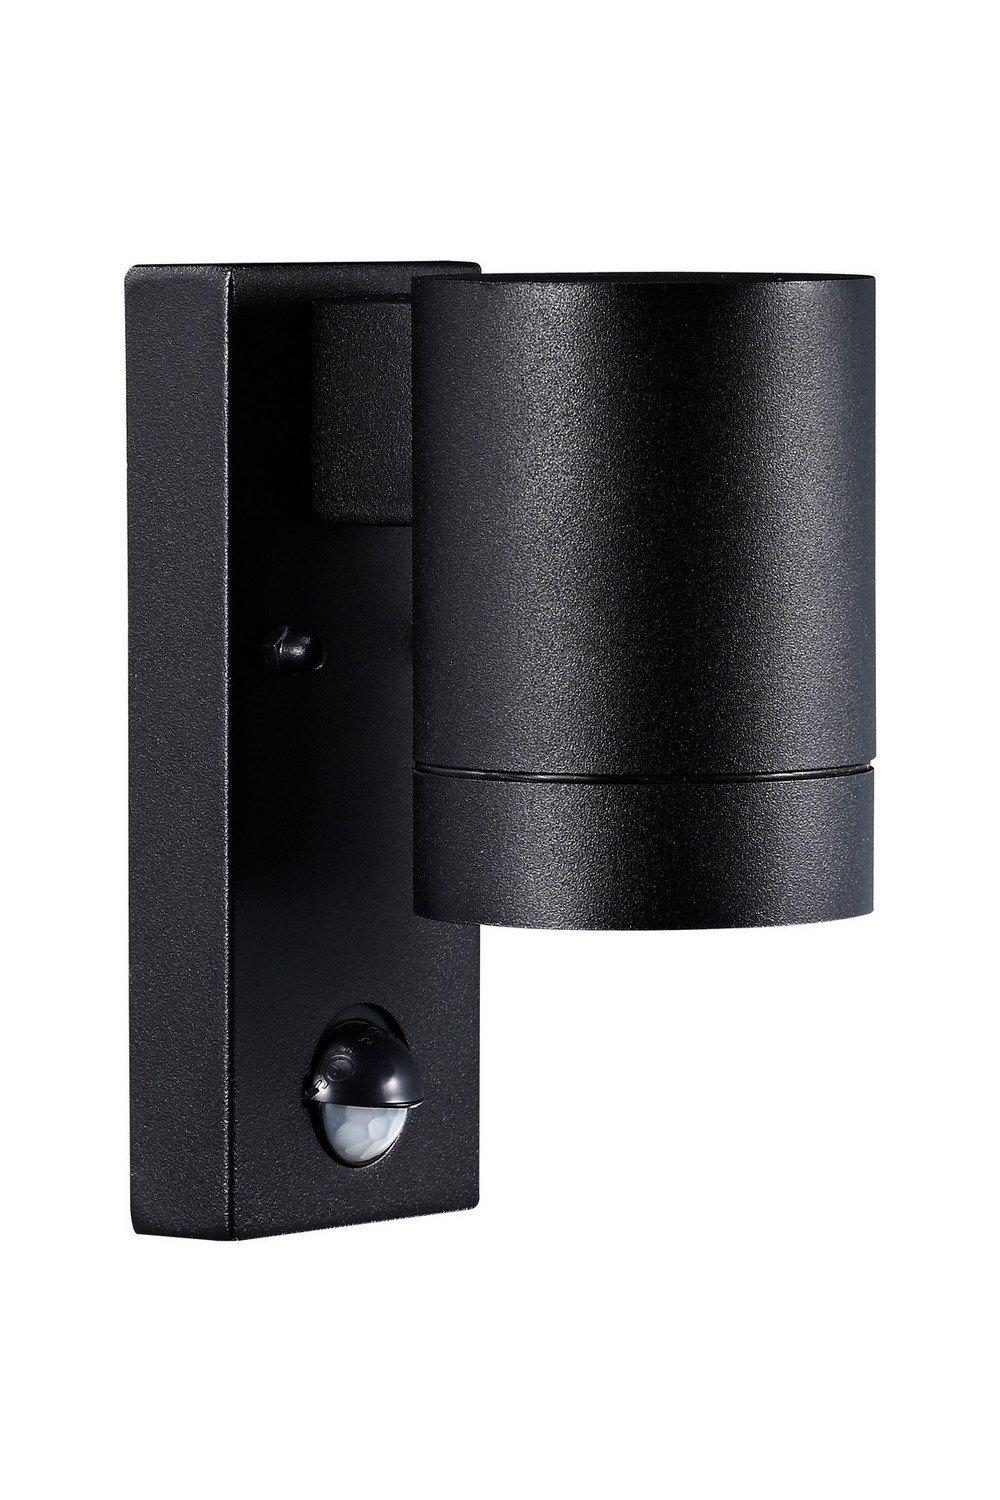 Tin Maxi Outdoor Down Wall Lamp Black GU10 IP54